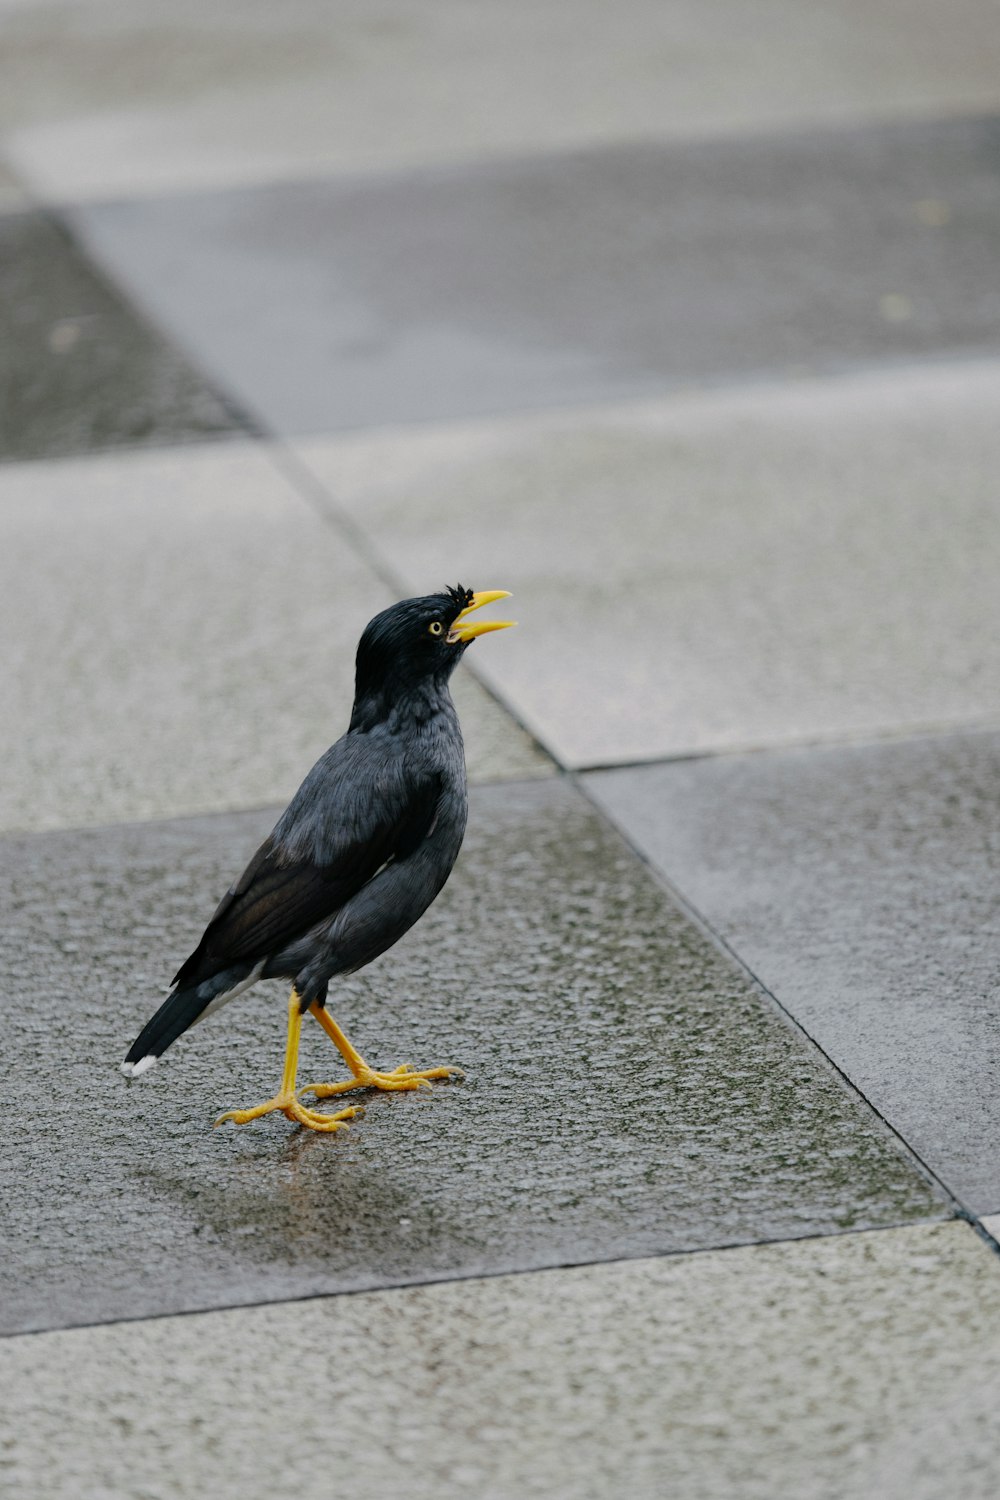 a black bird with a yellow beak standing on a tiled floor